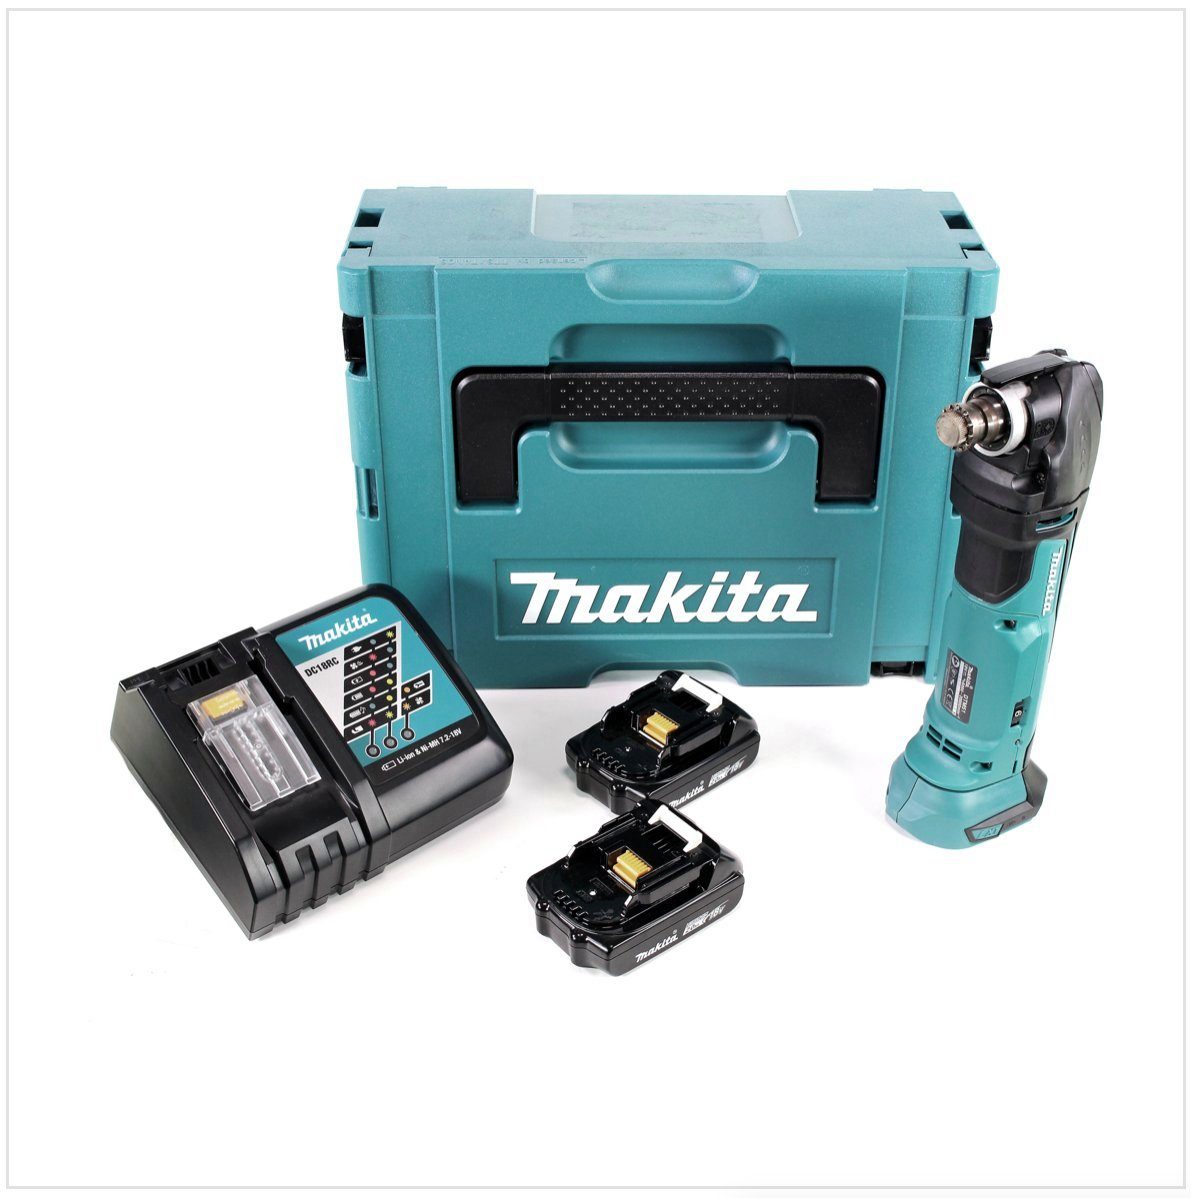 Makita Akku-Multifunktionswerkzeug »Makita DTM 51 RAJ Akku Multitool  Oszillierer 18 V + 2x Akku 2,0 Ah + Ladegerät + Makpac« online kaufen | OTTO